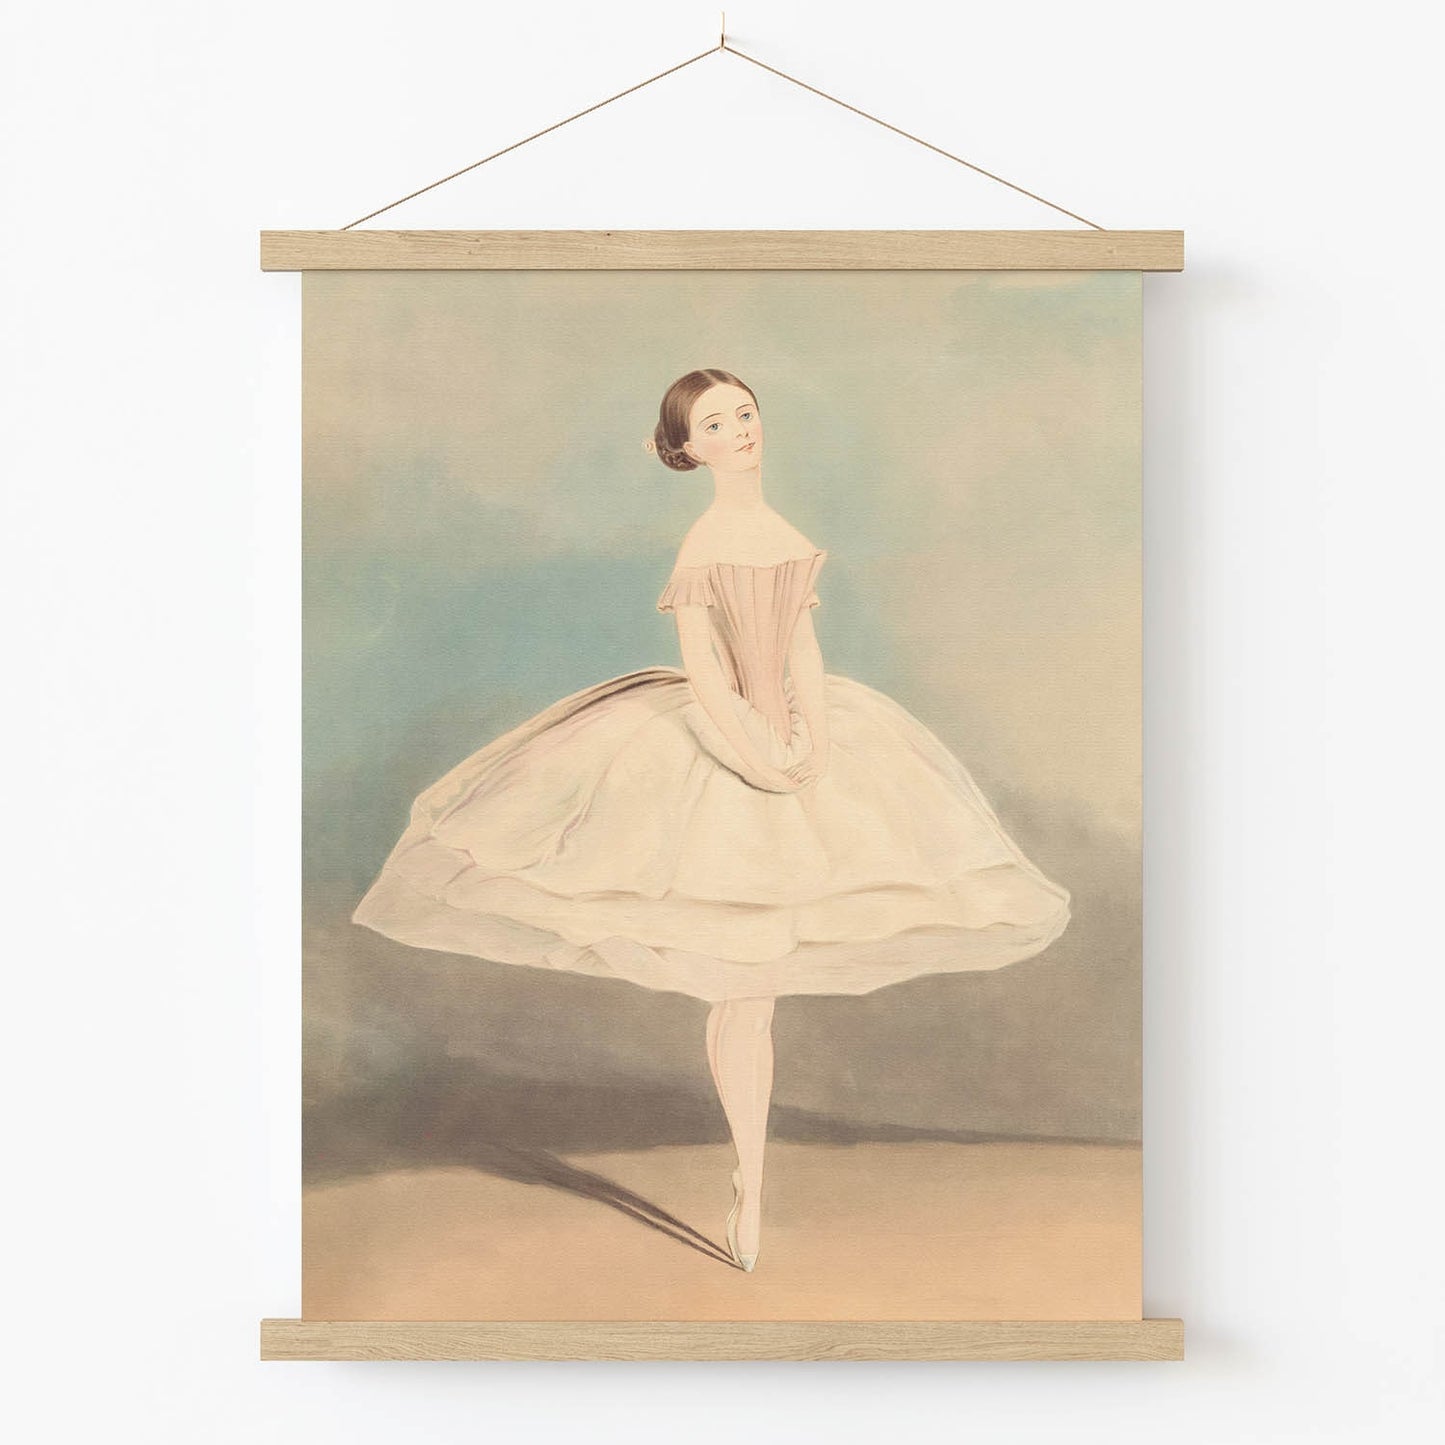 Minimalist Ballet Art Print in Wood Hanger Frame on Wall